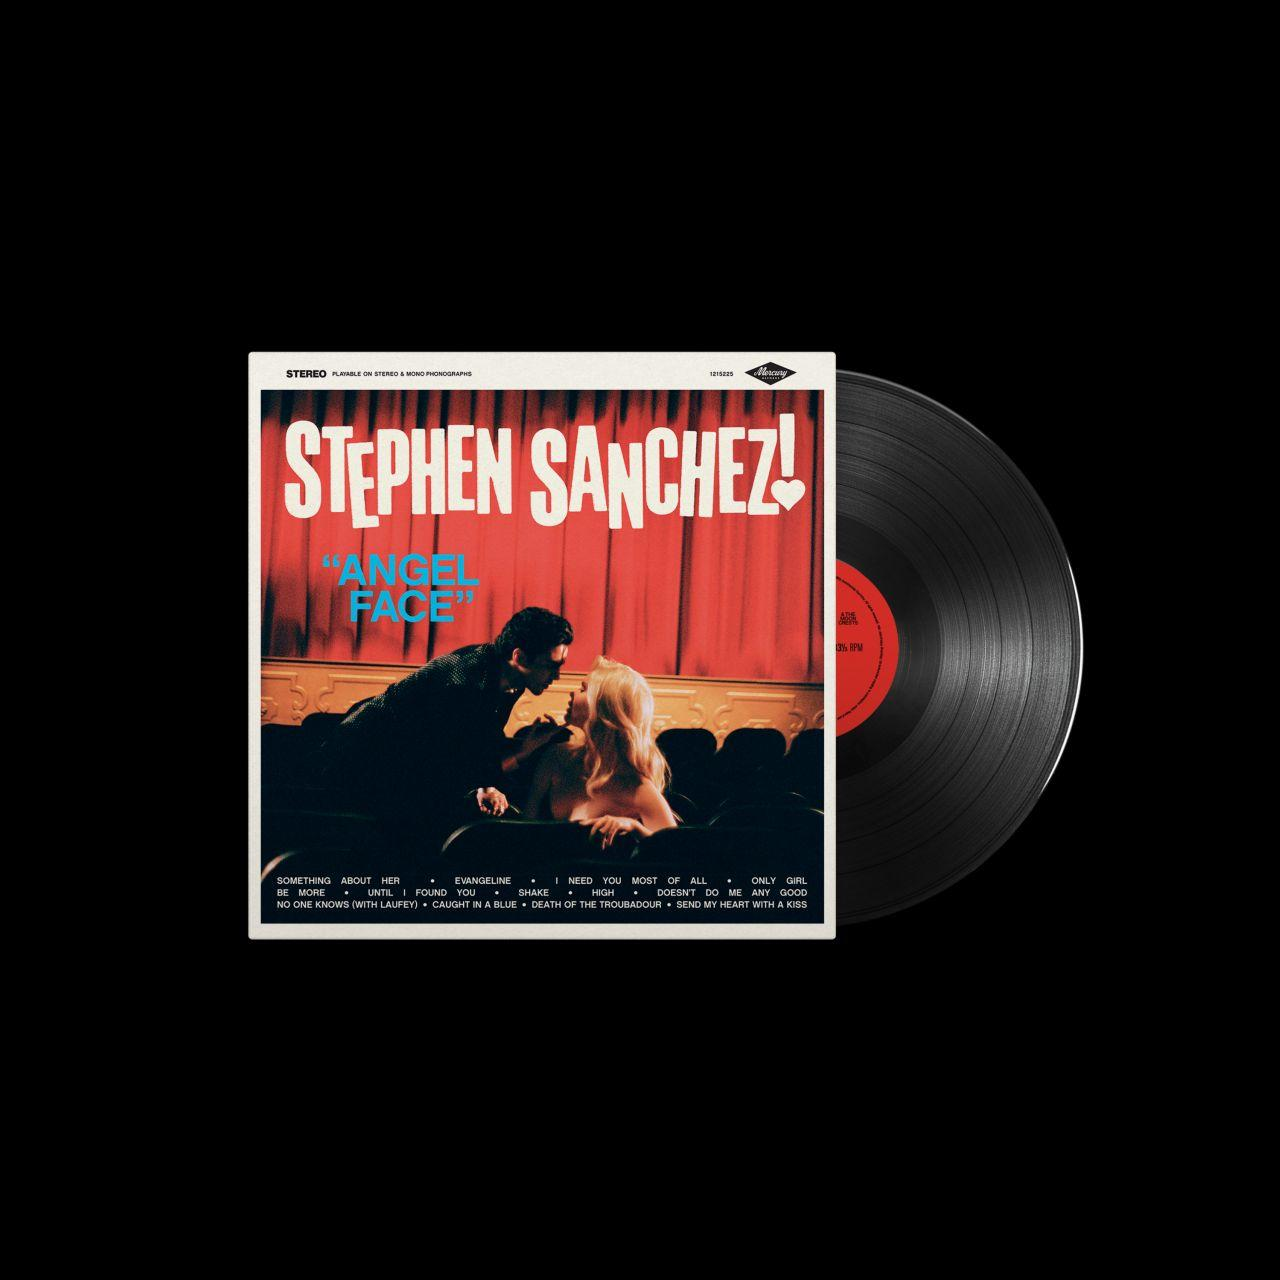 Face (STD. - Vinyl) Steven Sanchez - Black Angel (Vinyl)